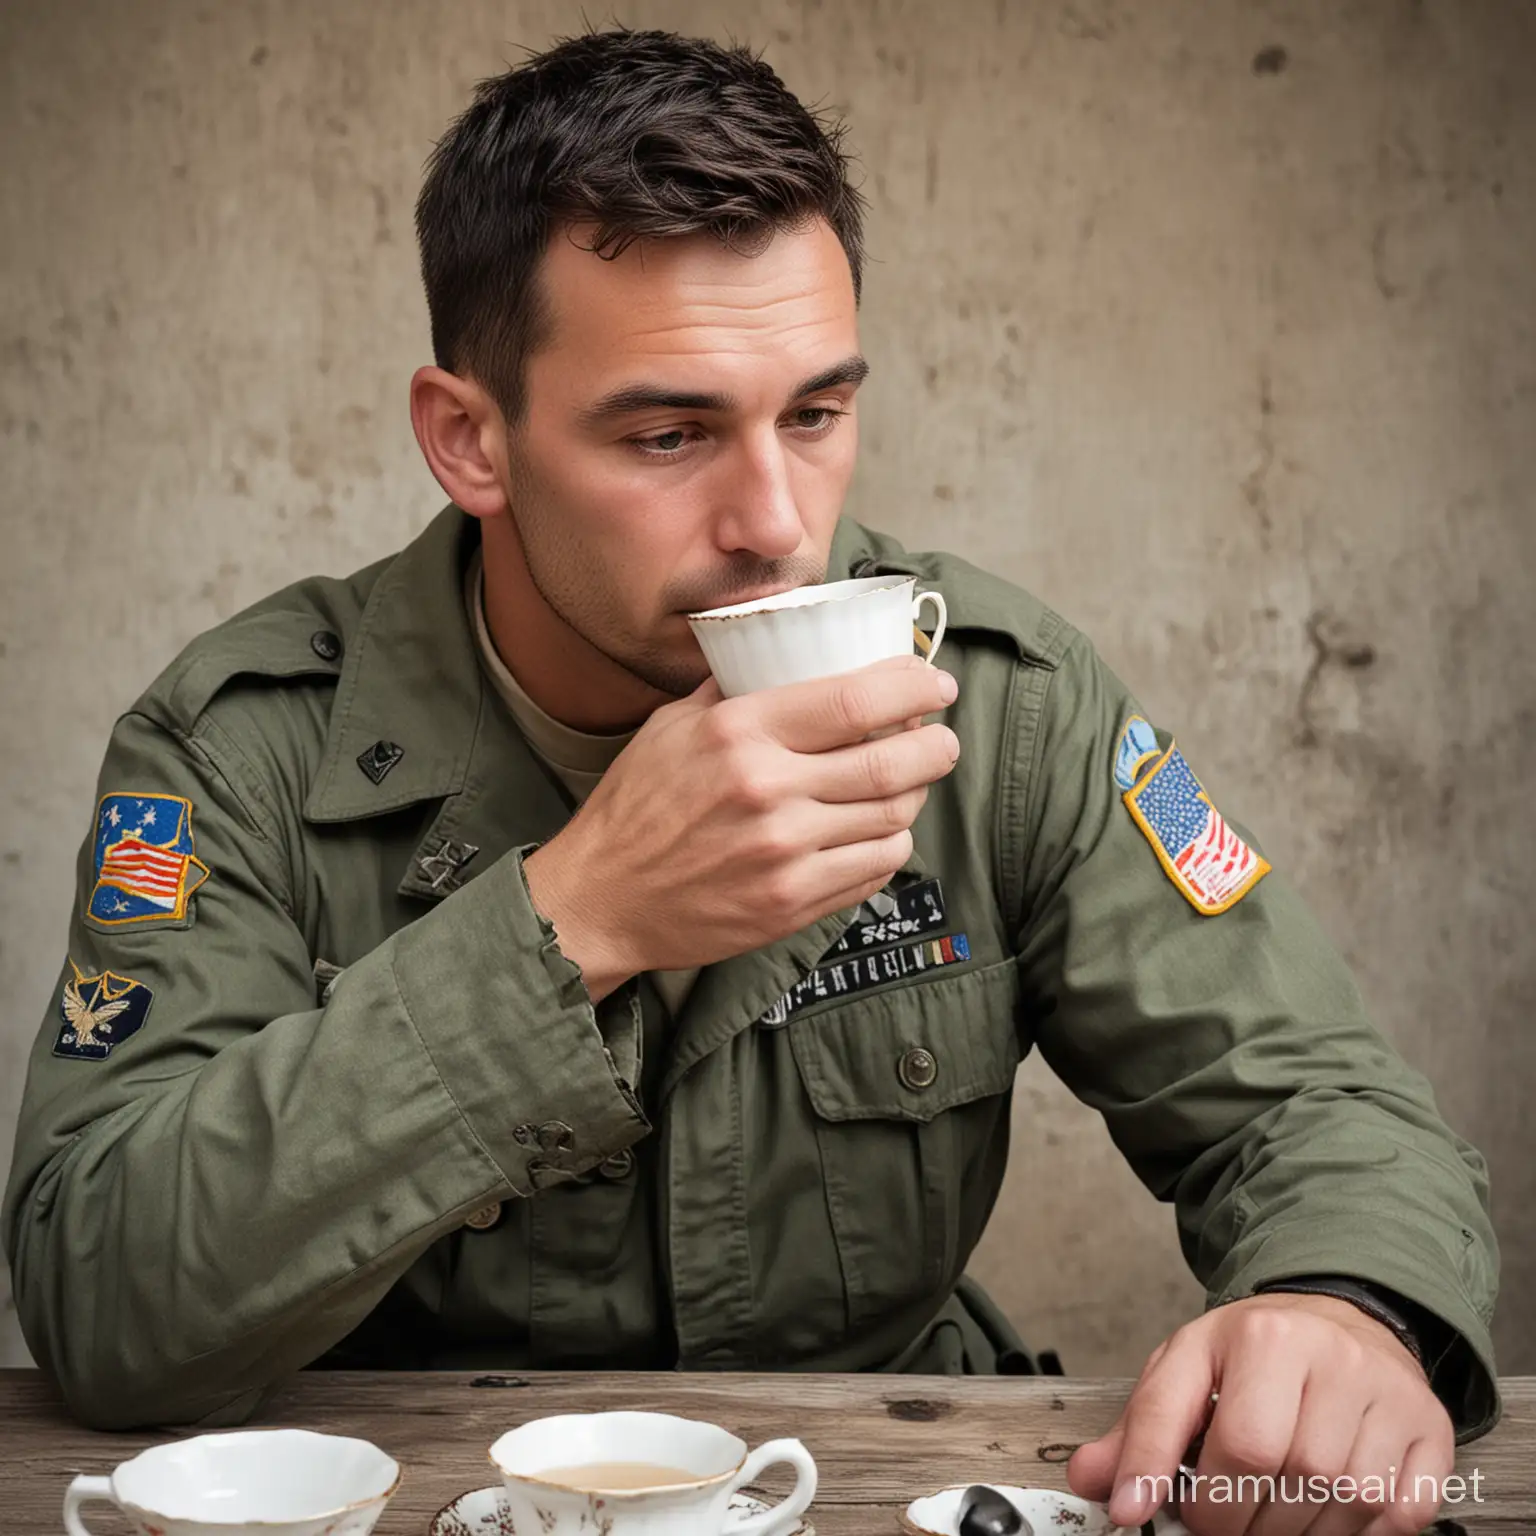 Veteran Enjoying a Delicate Tea Moment in Tattered US Army Uniform